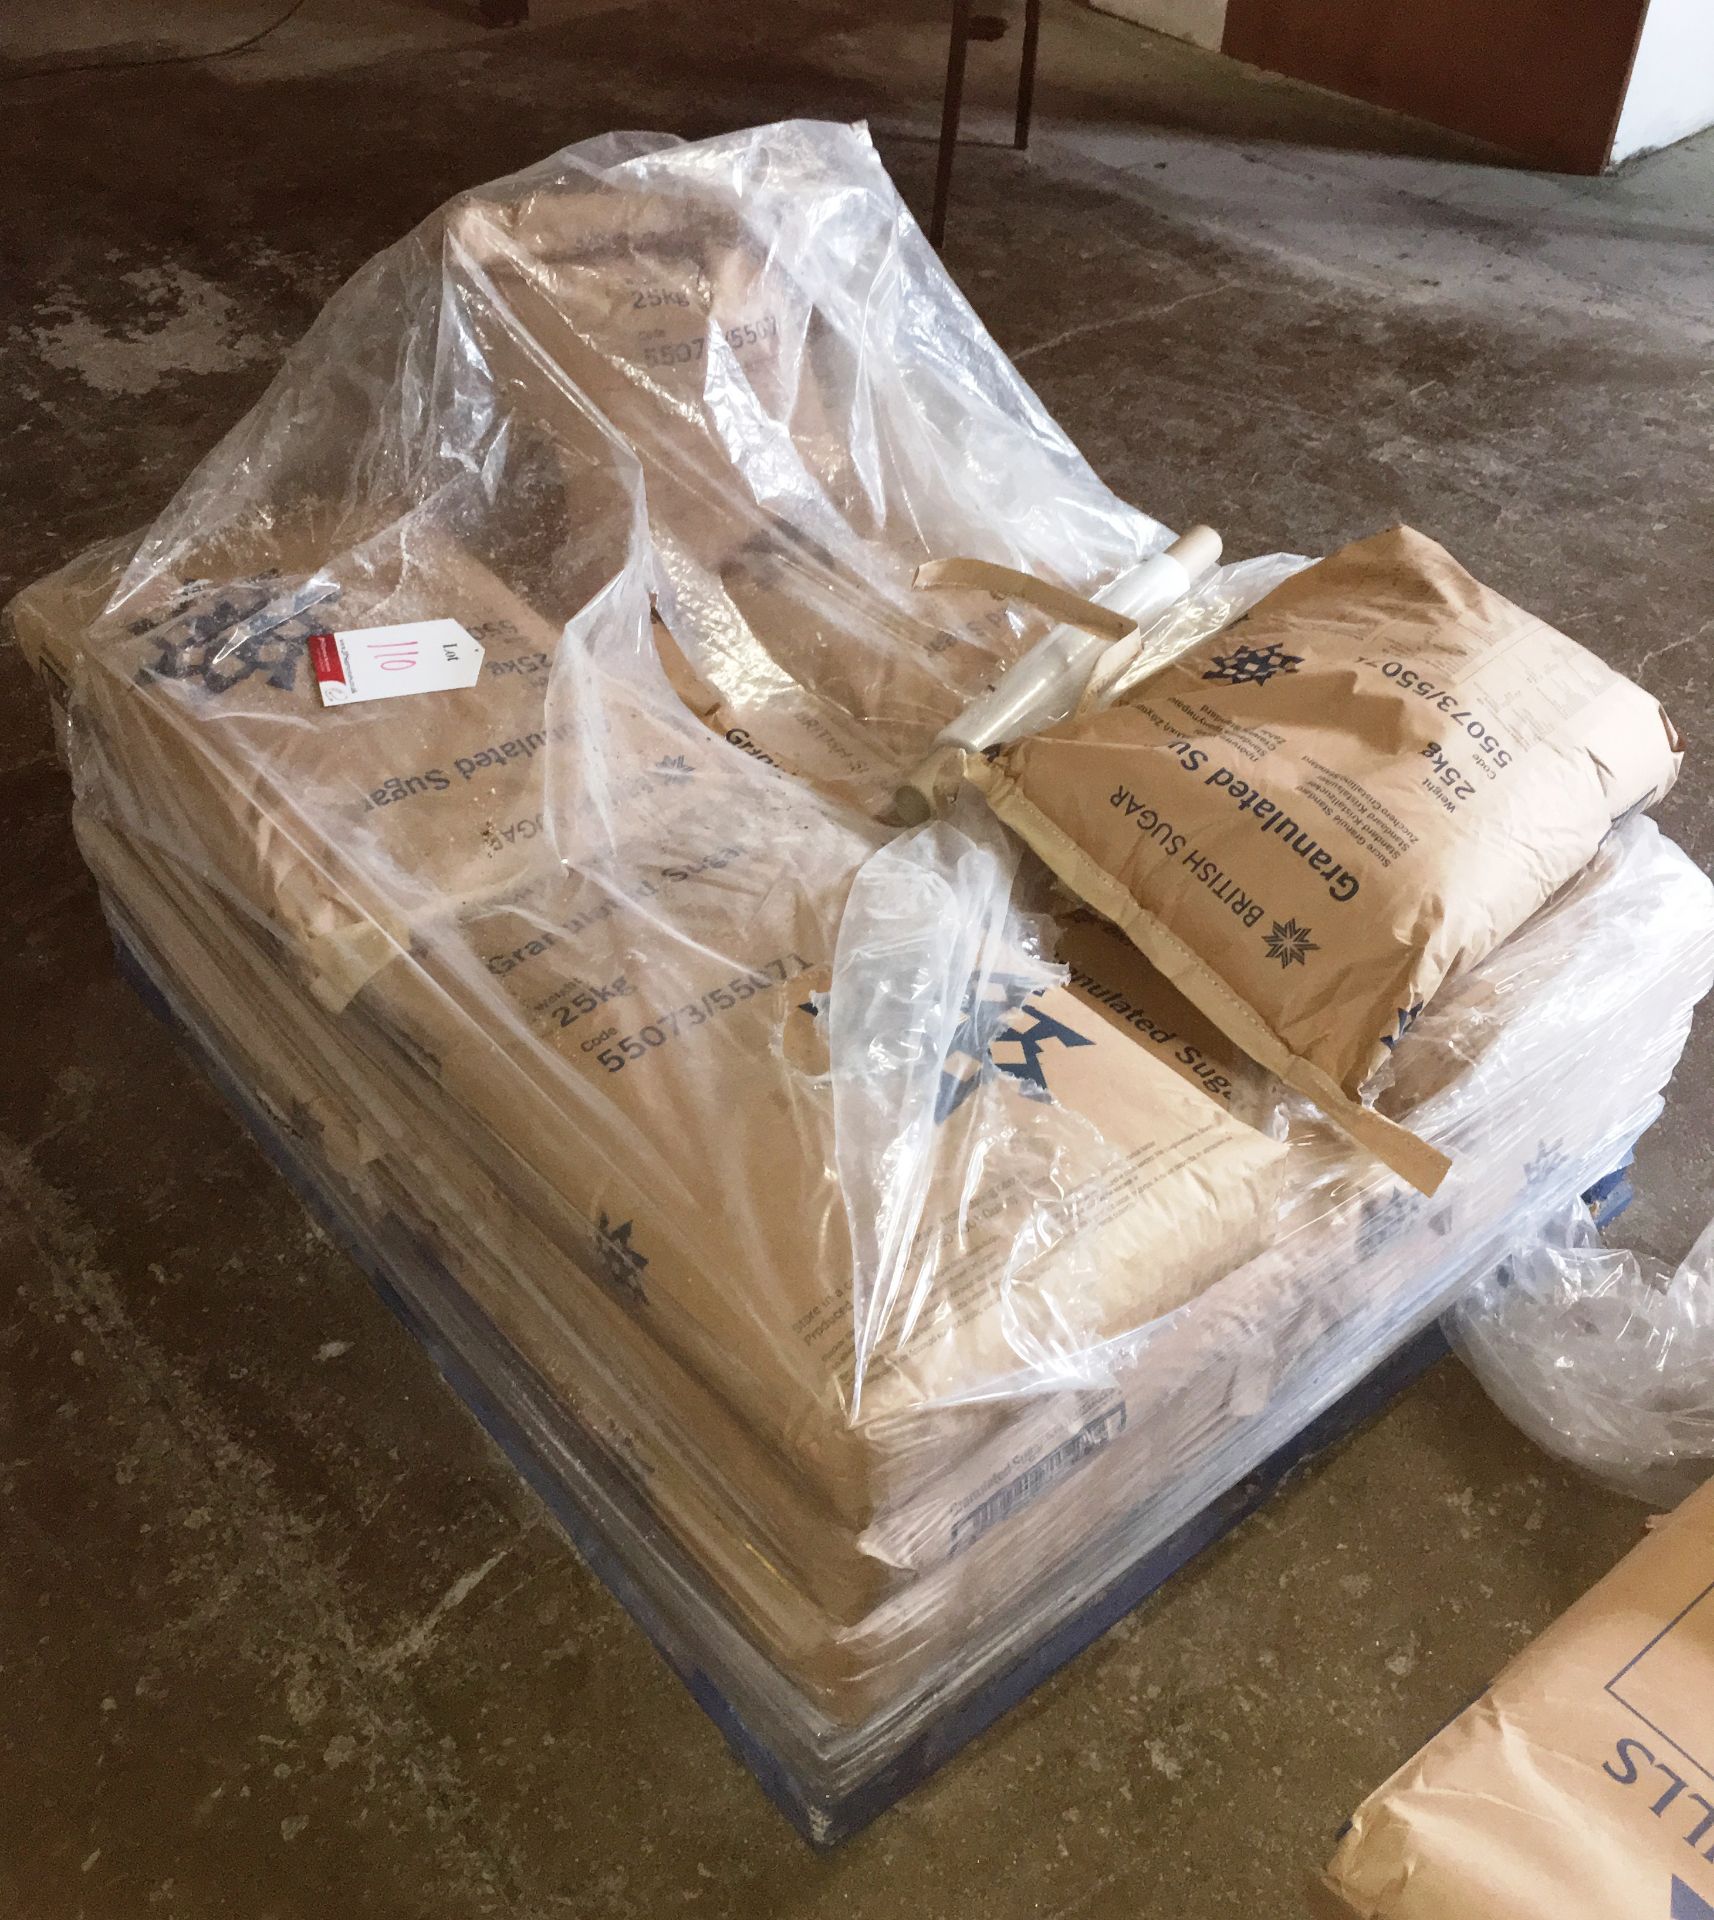 13 x 25kg Bags of Granulated Sugar - NO EXPIRATION DATE